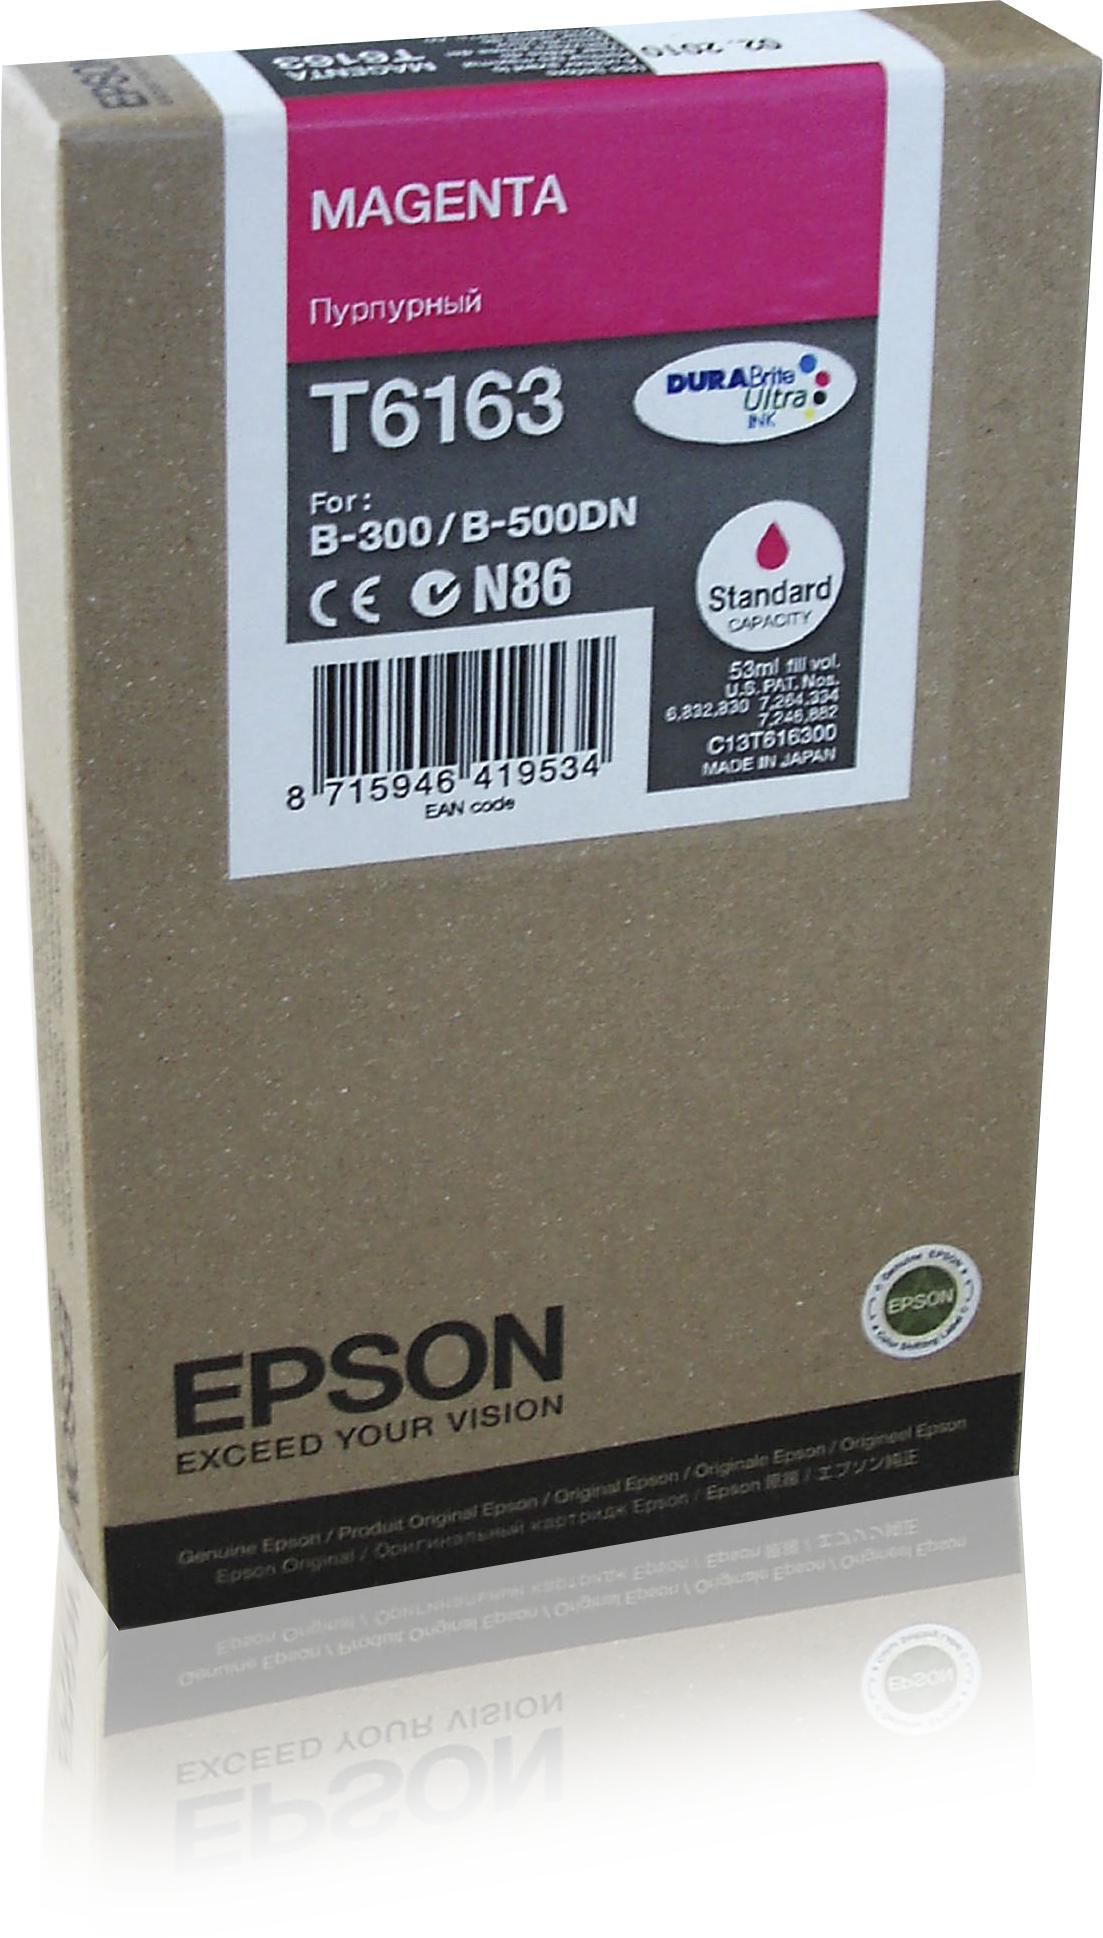 EPSON T6163 Magenta Tintenpatrone